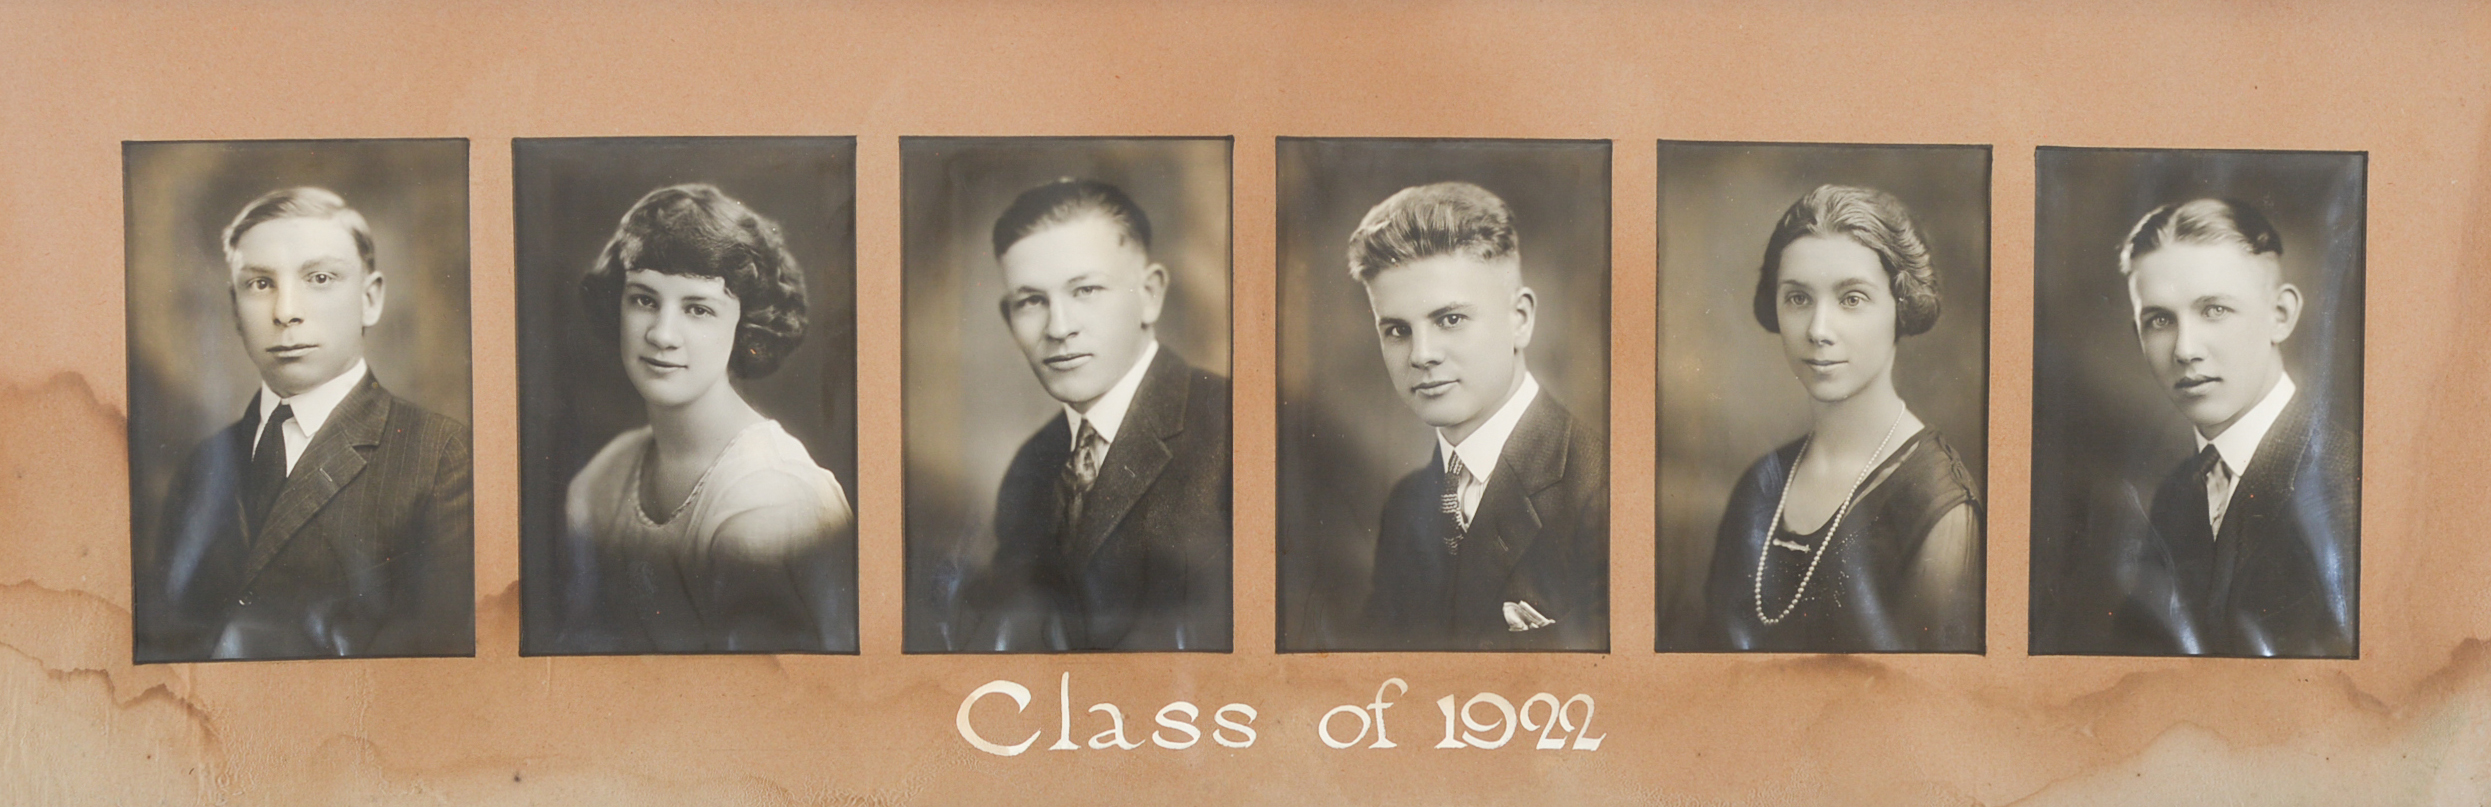 Class of 1922